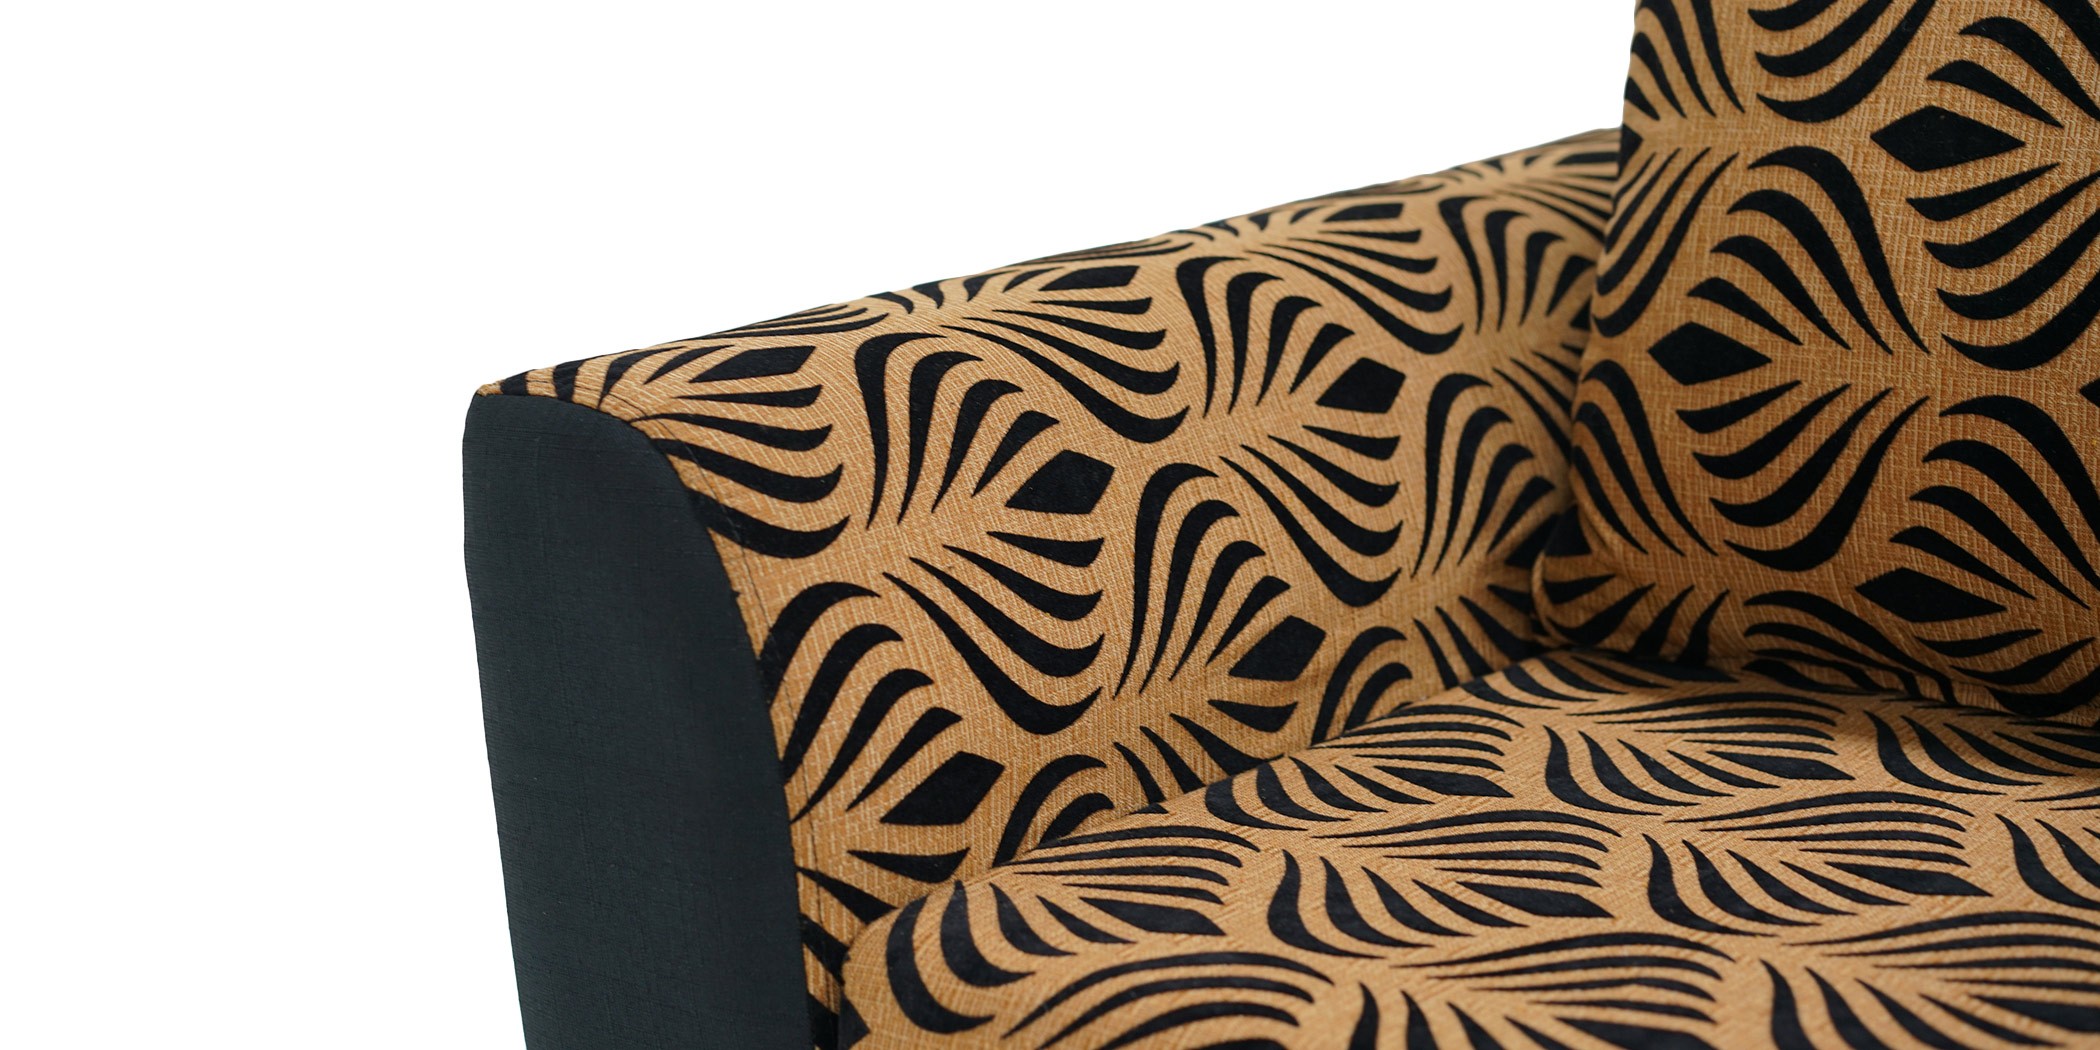 Elsa Sofa 3+2+1 Black W/Brown Pattern Fabric